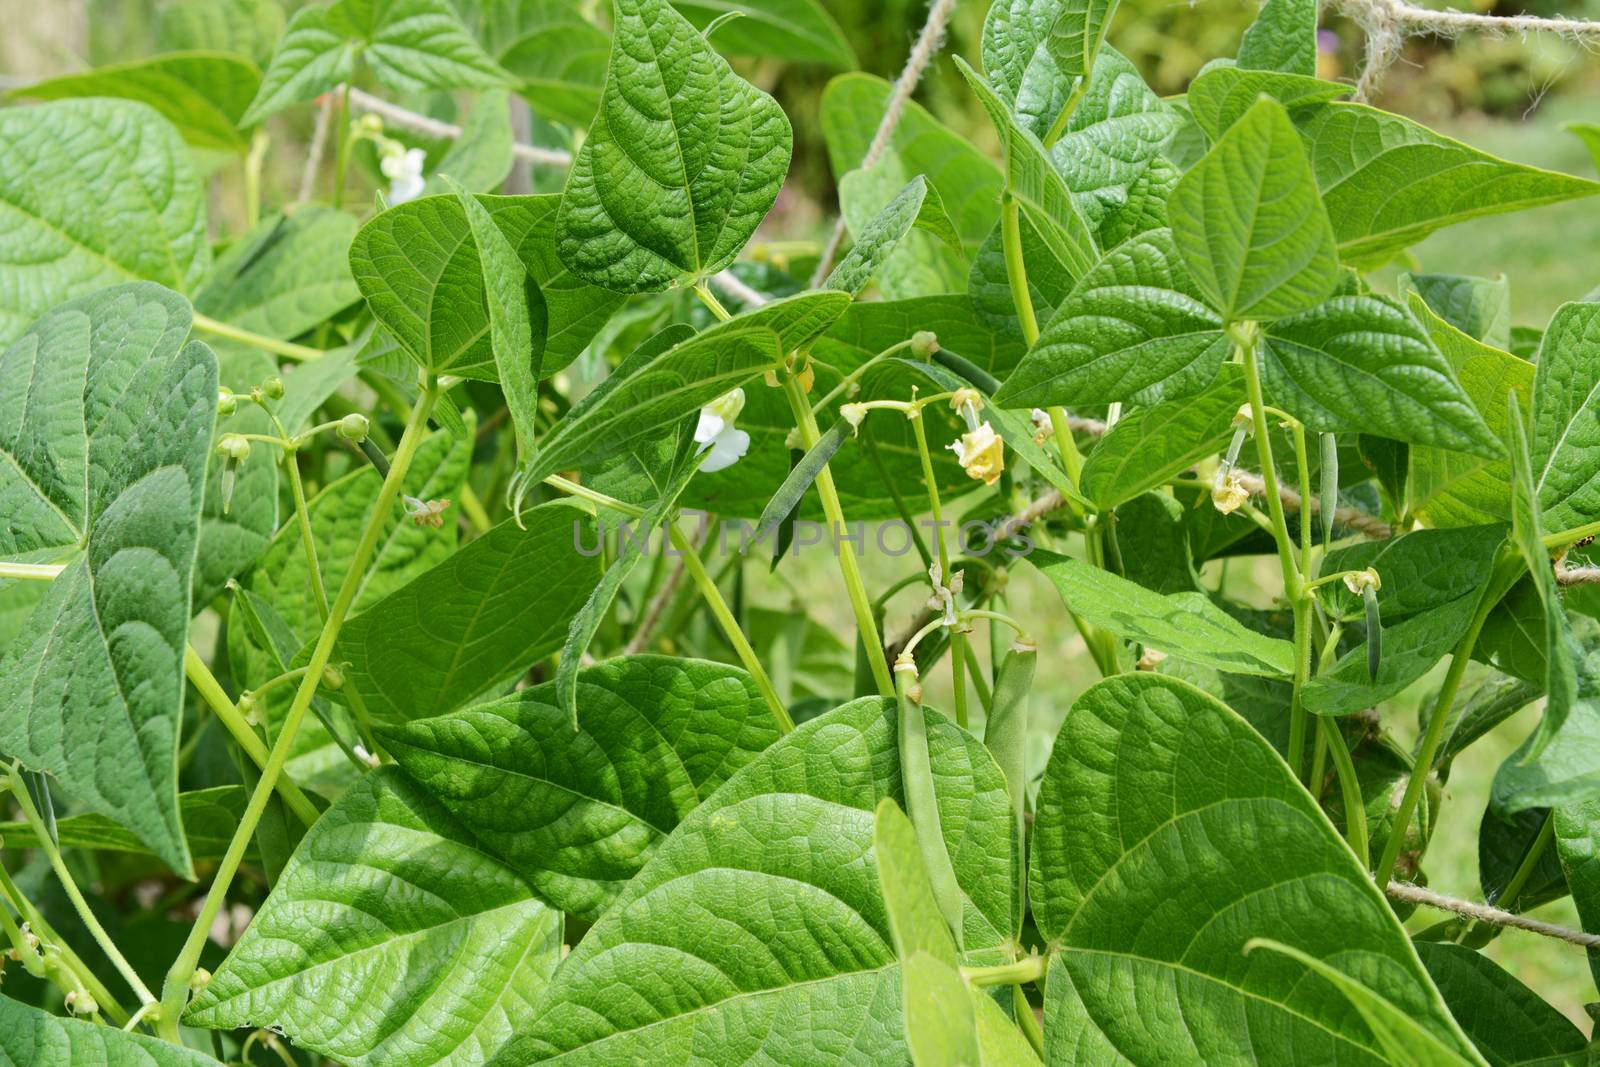 Calypso or yin yang beans growing among lush green leaves by sarahdoow